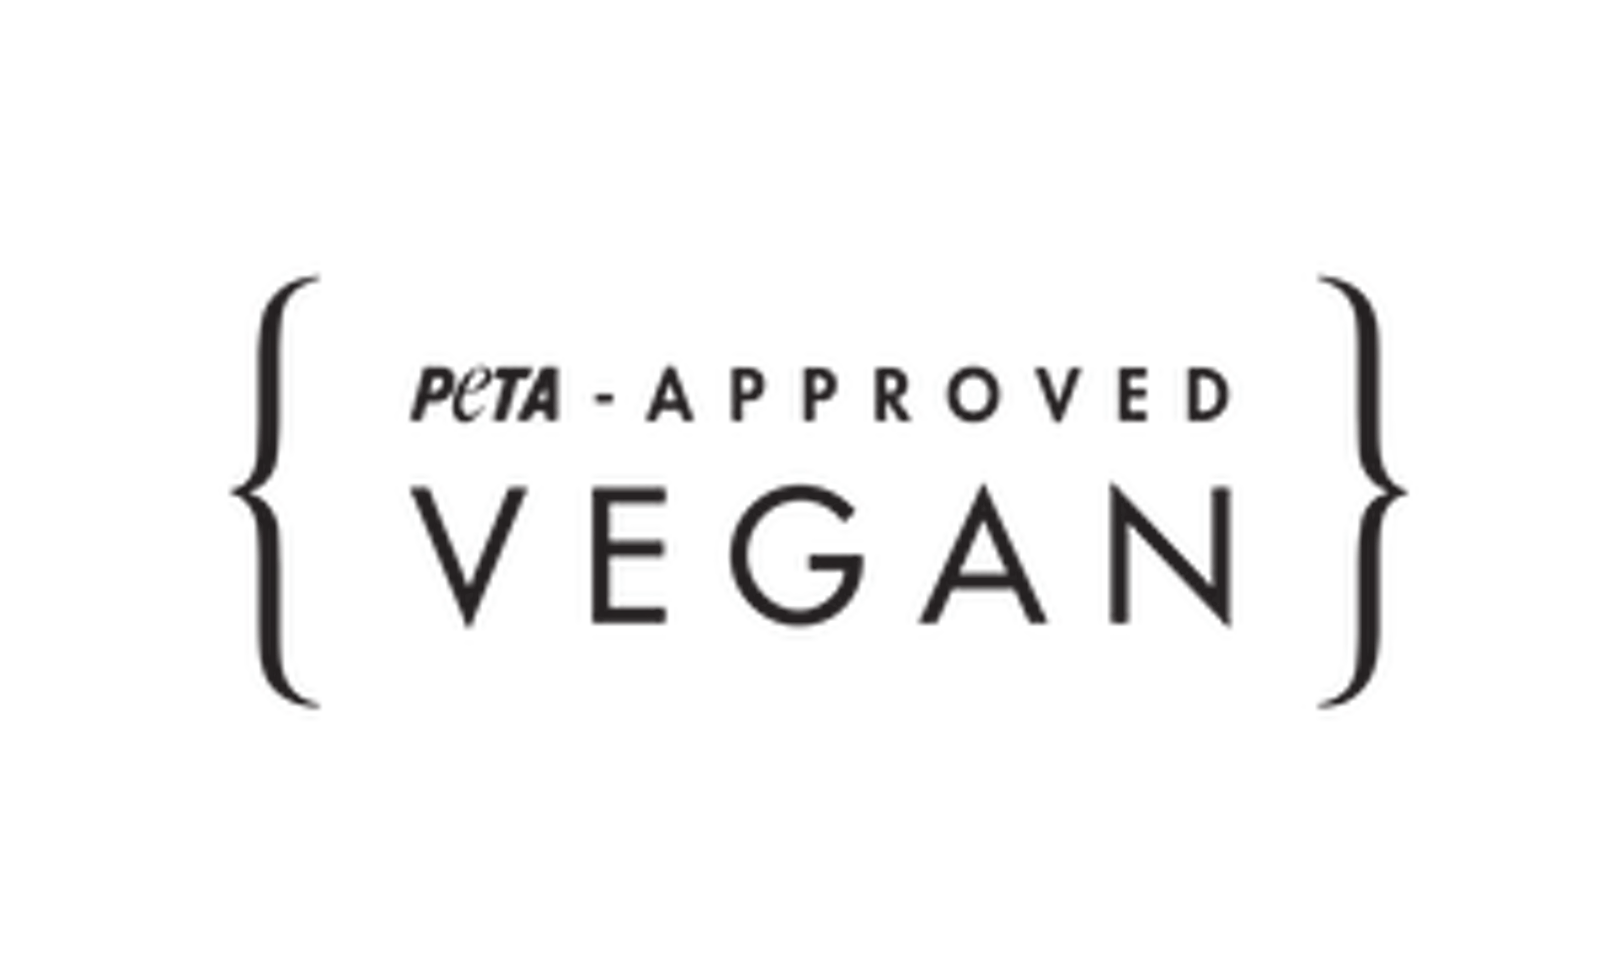 Vegan Peta approved certification